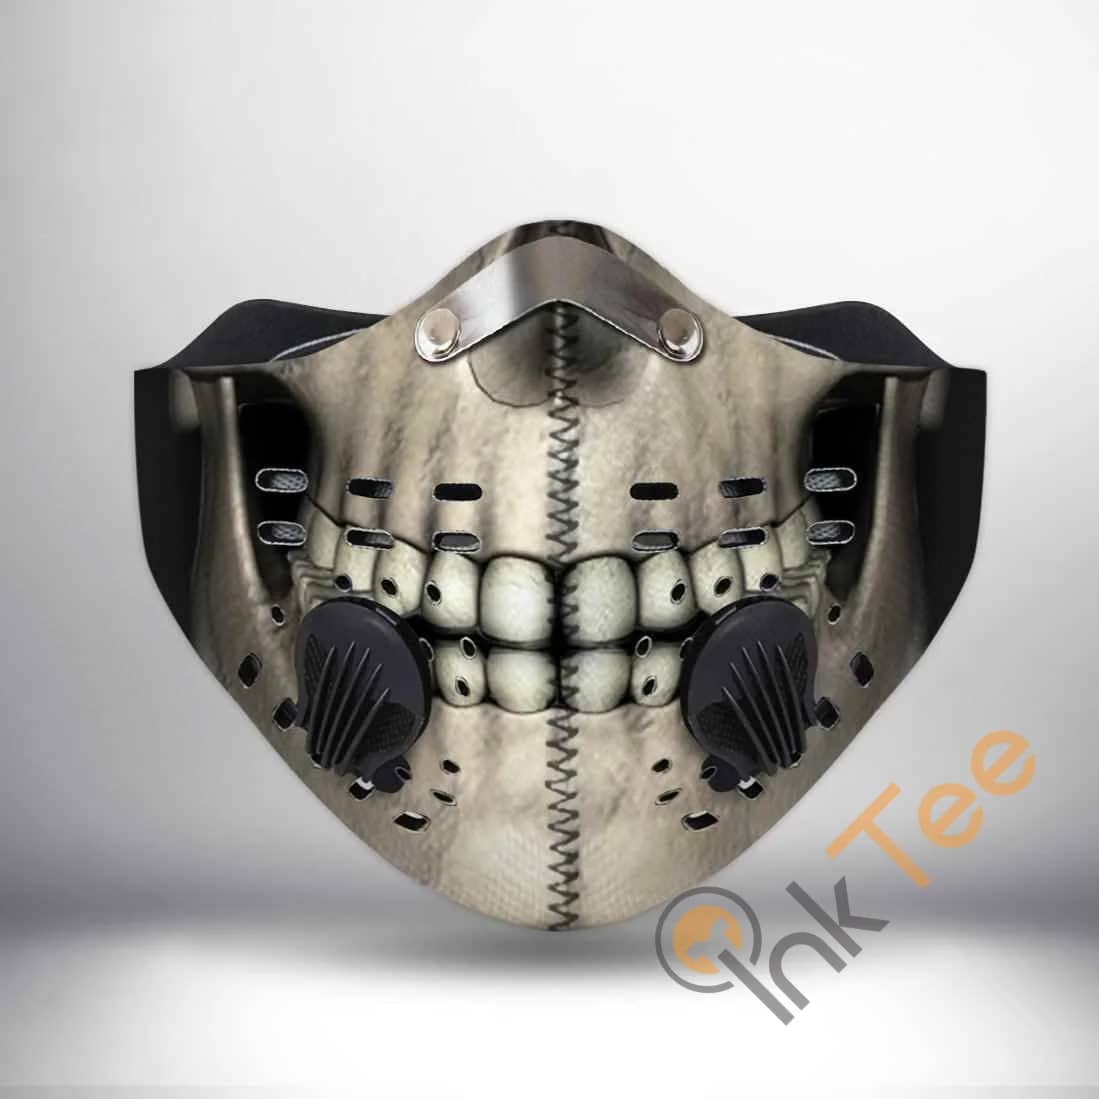 Skull Filter Activated Carbon Pm 2.5 Fm Sku 412 Face Mask